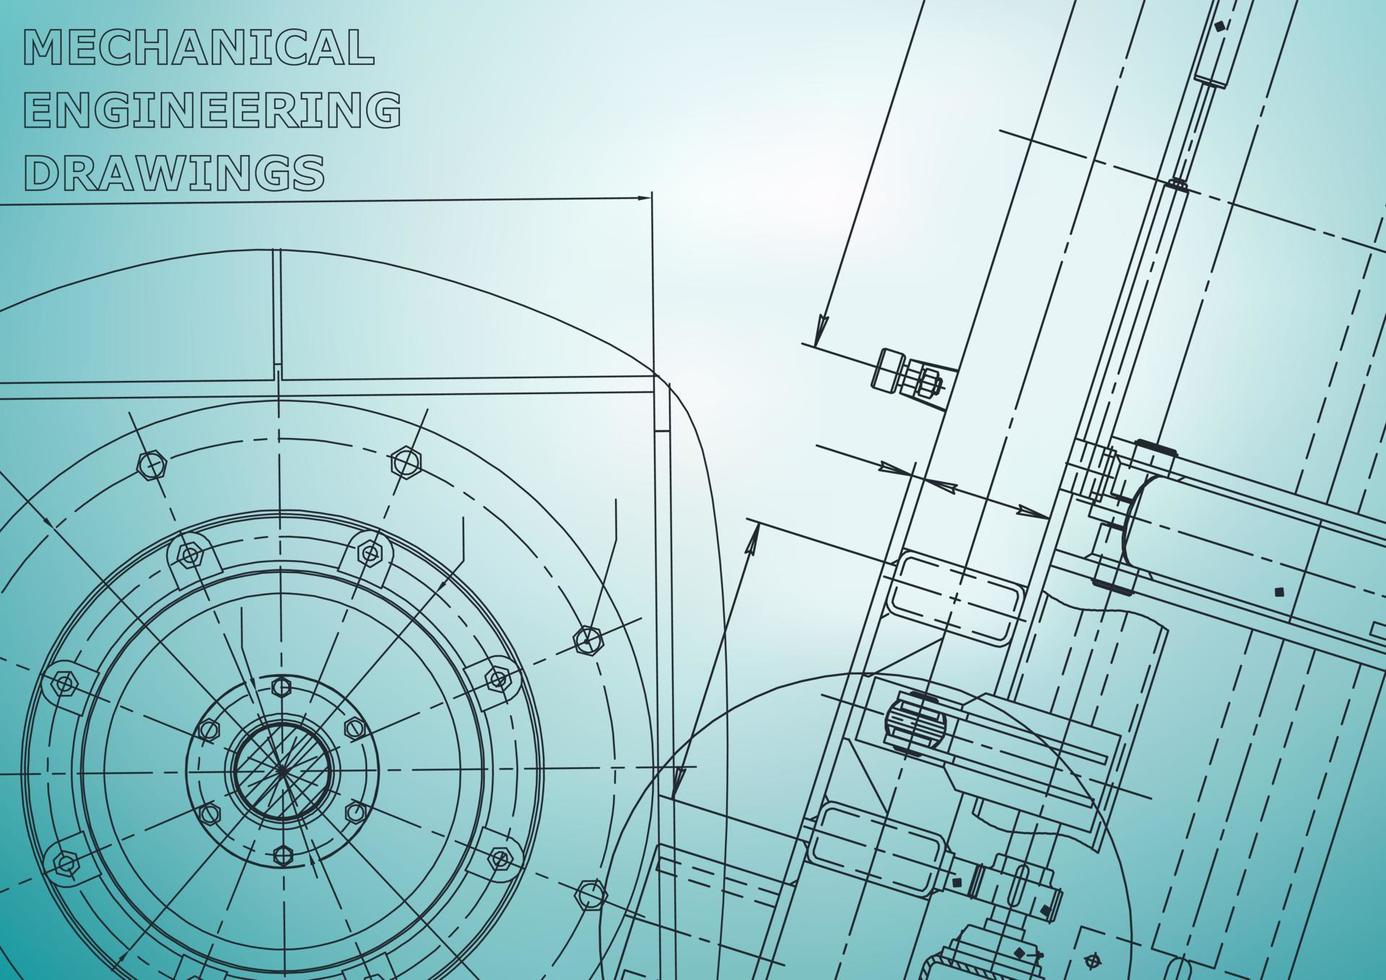 Blueprint. Vector engineering illustration. Cover, flyer, banner, background. Instrument-making drawings. Mechanical engineering drawing. Technical illustrations